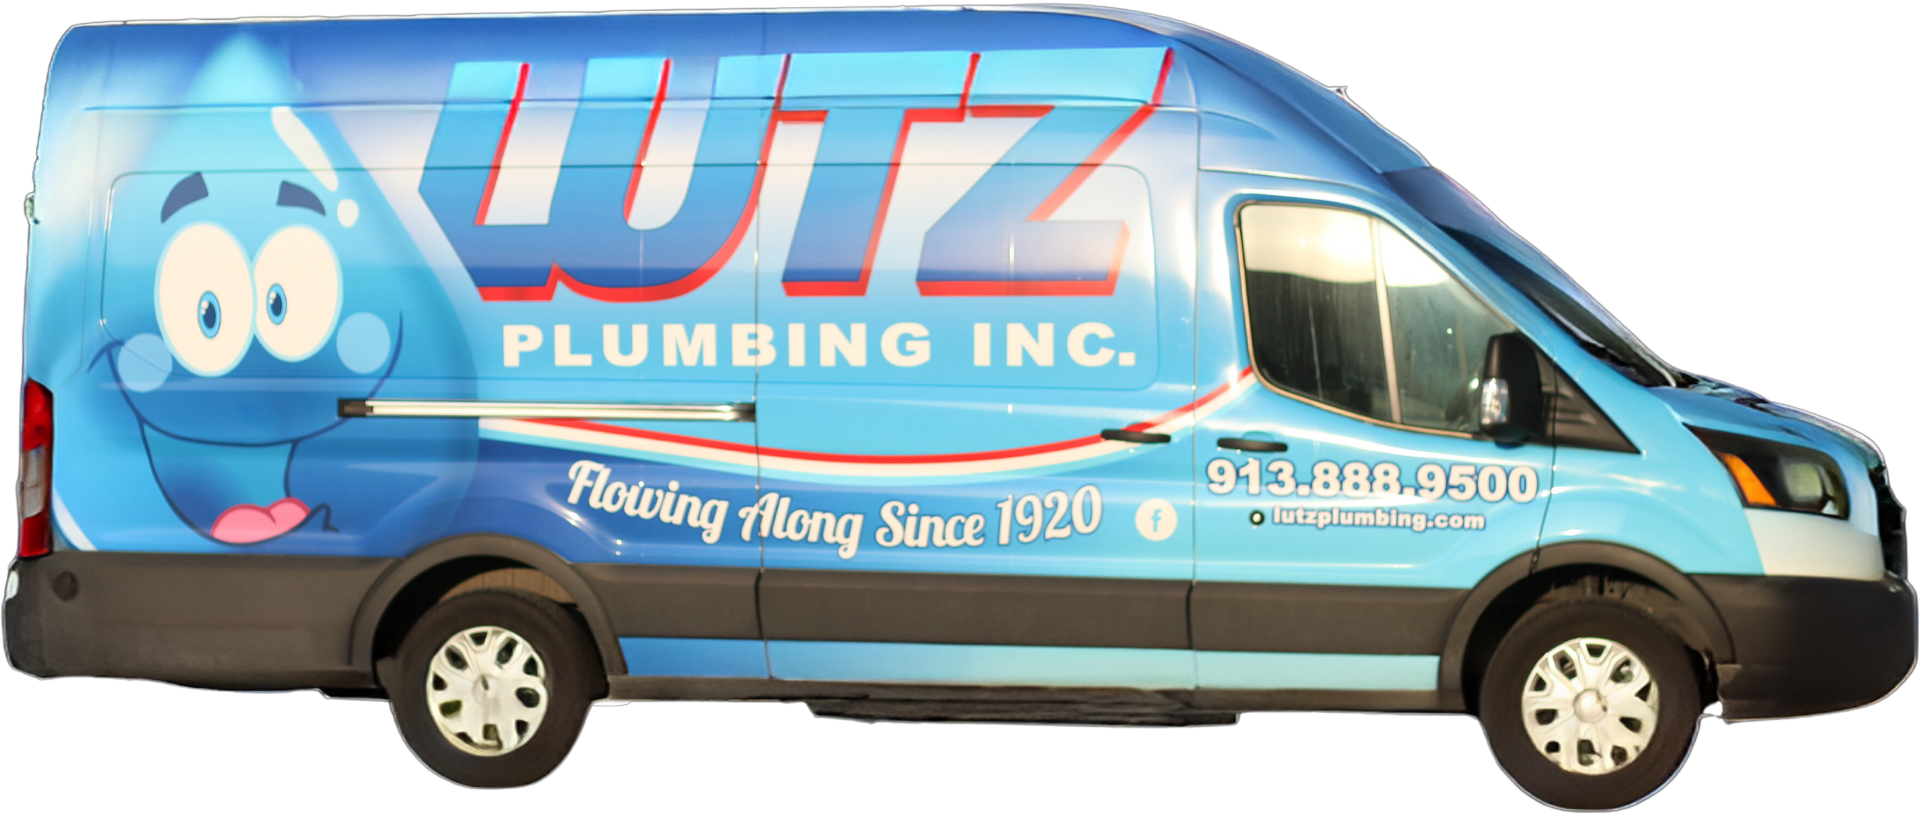 a blue van that says ' lutz plumbing inc ' on it